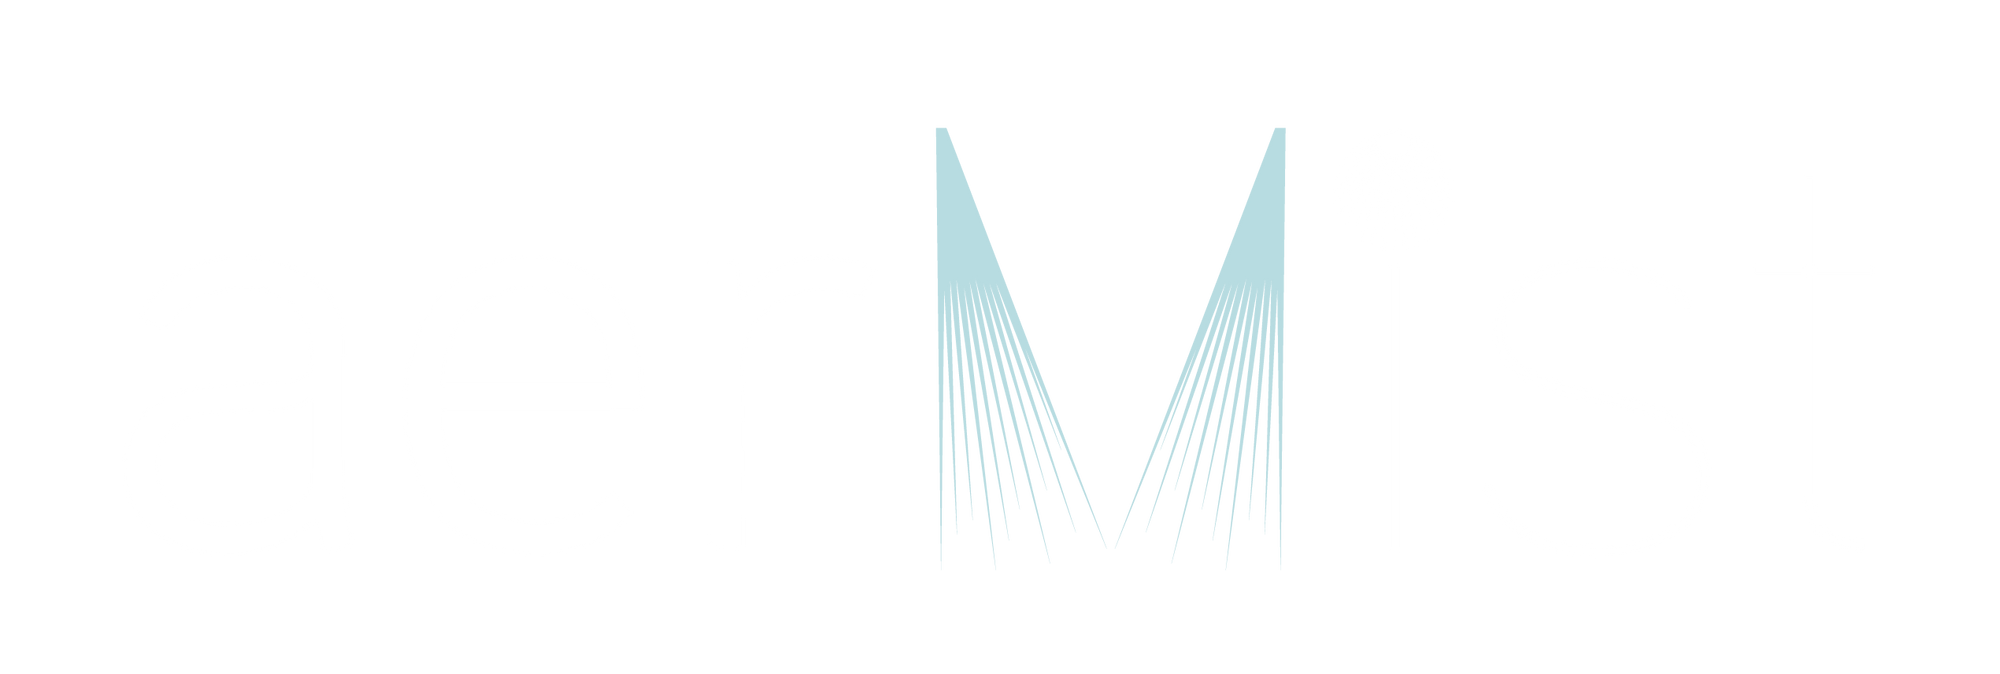 aerMist high pressure misting systems official logo